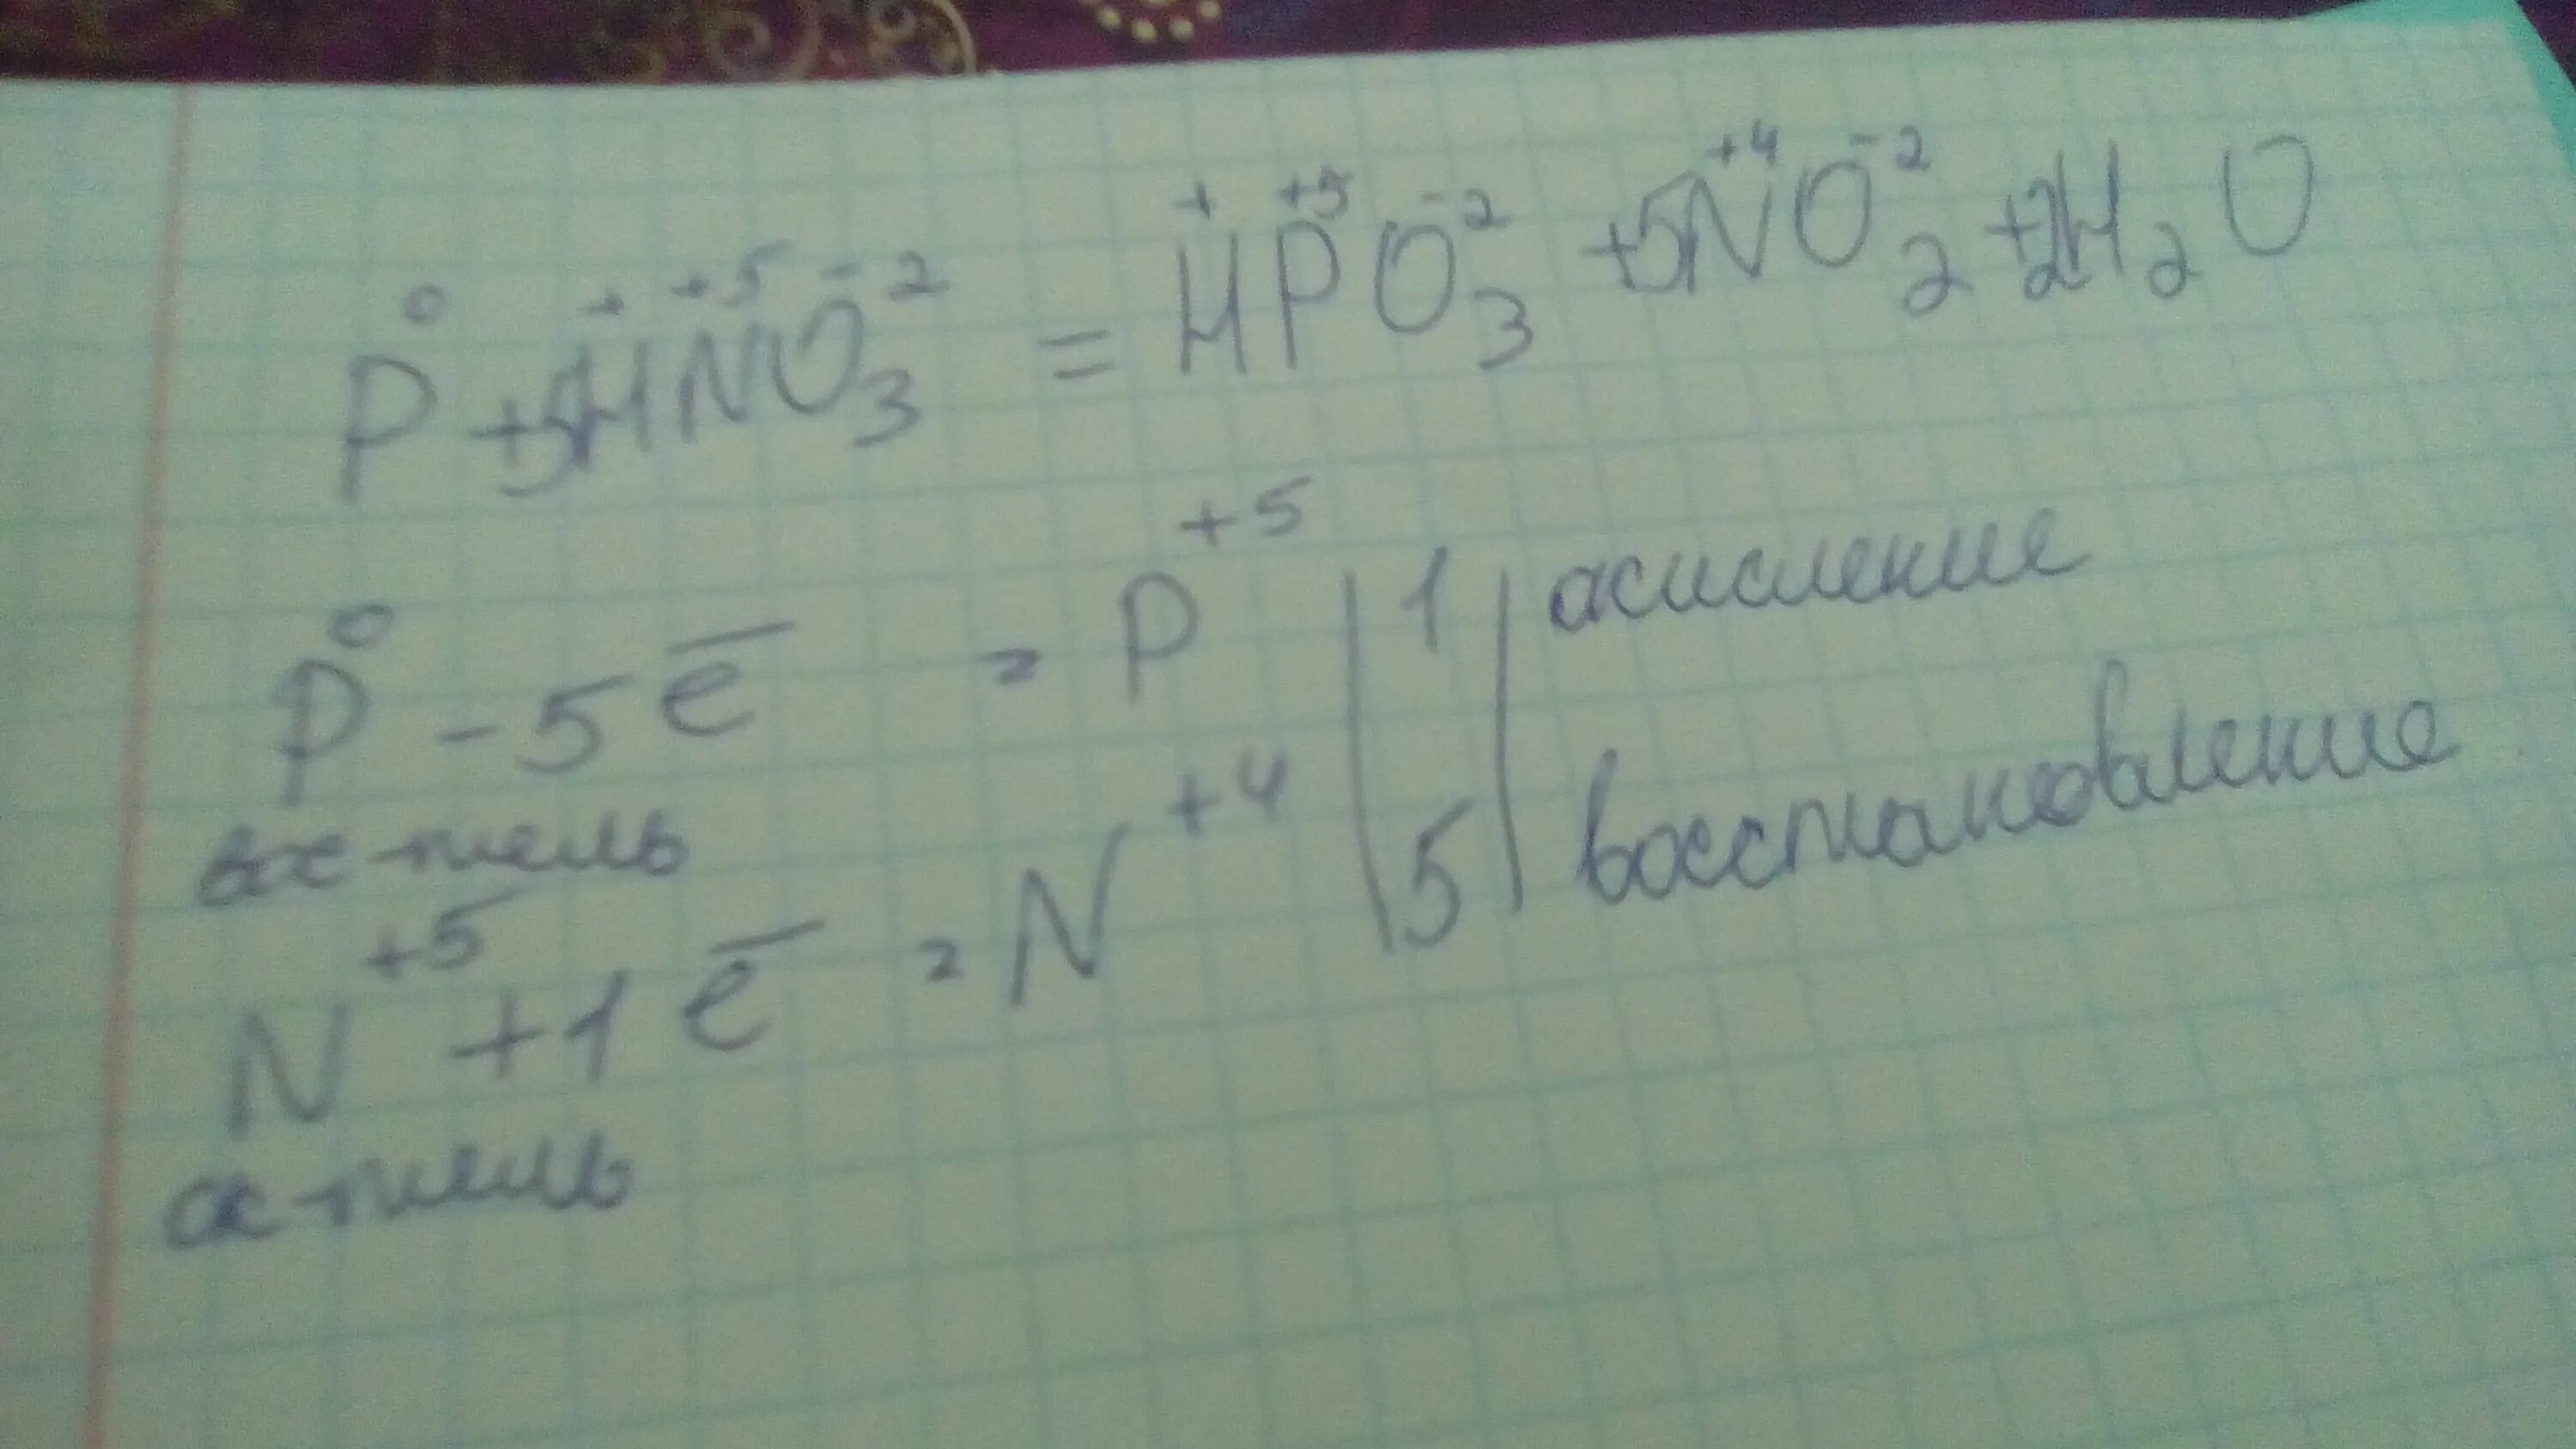 Koh hno3 какая реакция. Метод электронного баланса p+hno3+h2o. P+hno3+h2o окислительно восстановительная реакция. Баланс p+hno3 h3po4+no2+h2o. P hno3 h2o электронный баланс.